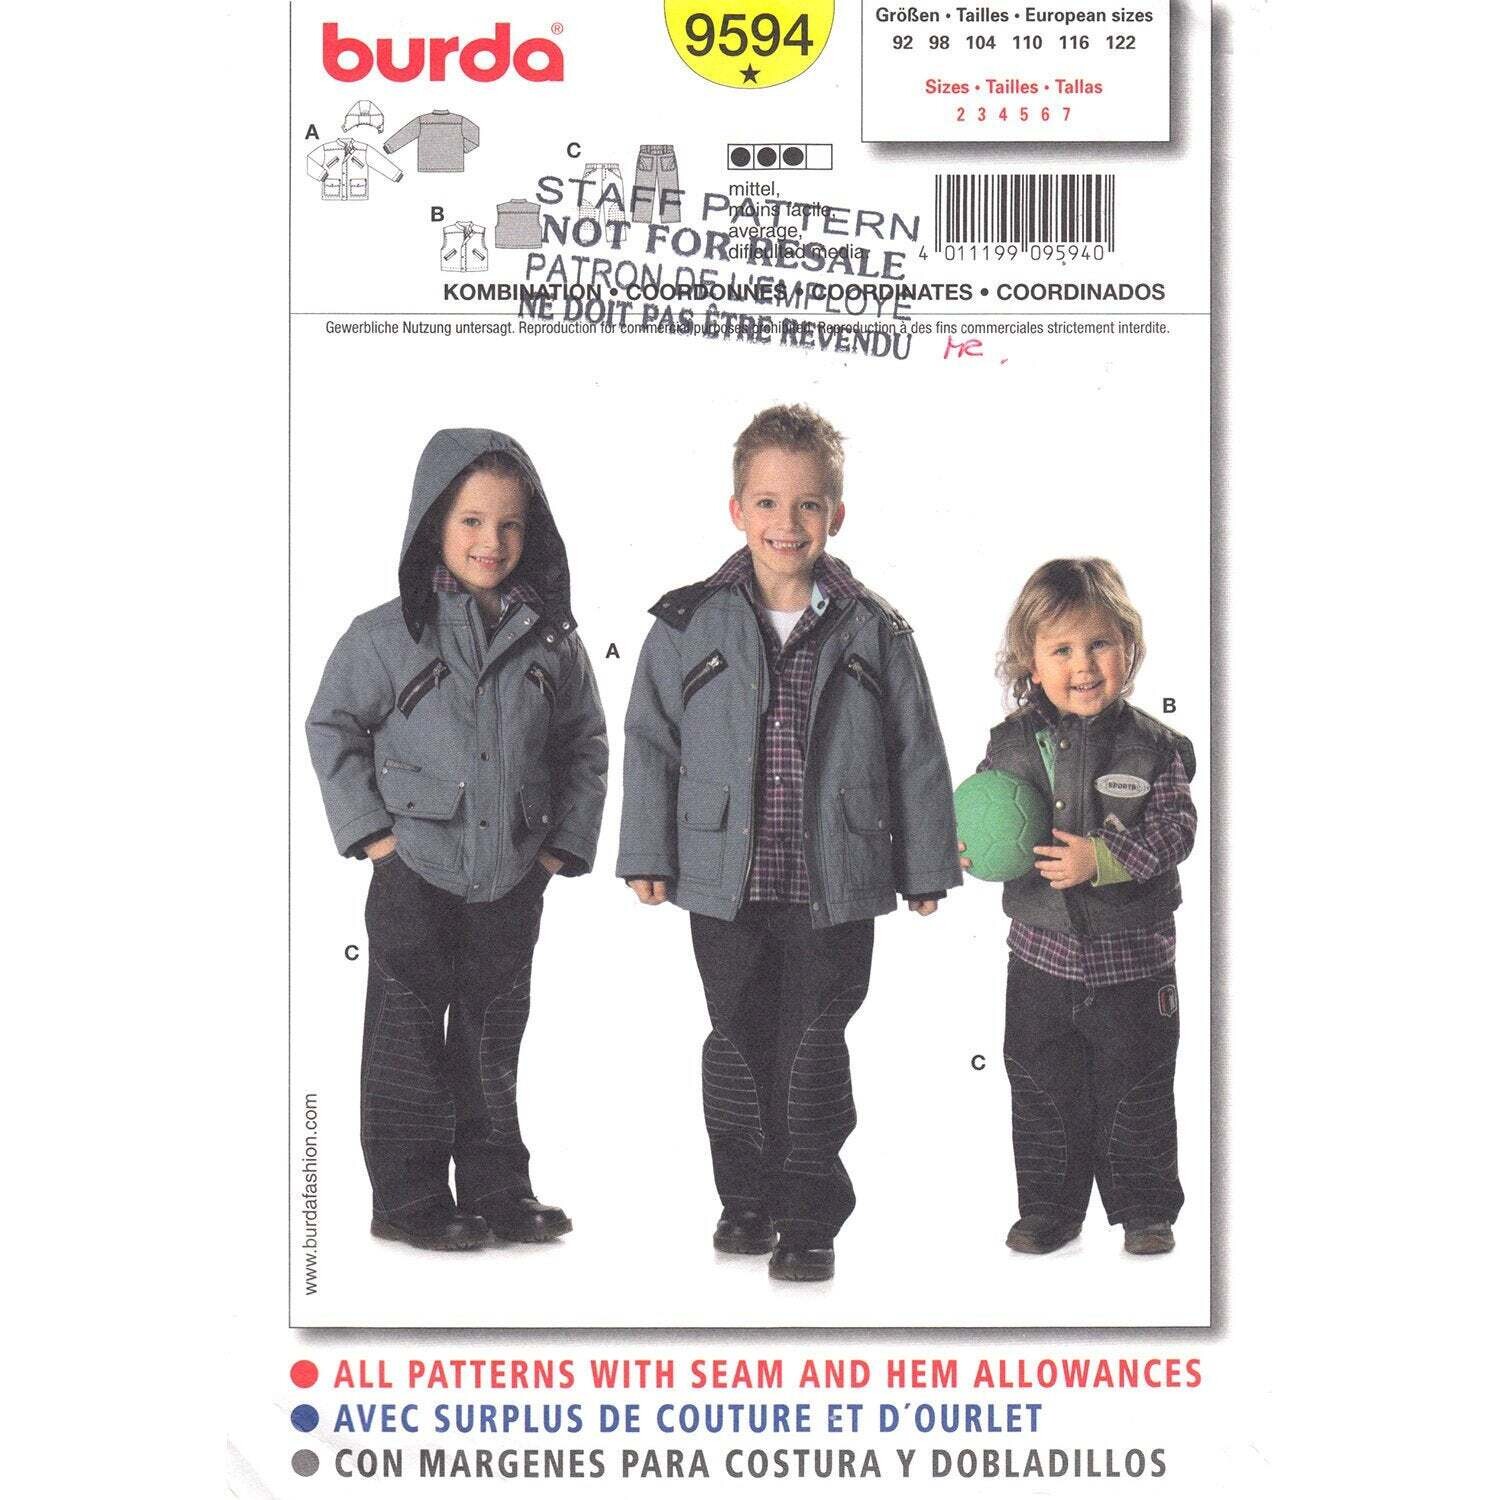 Burda 9594 boys pattern